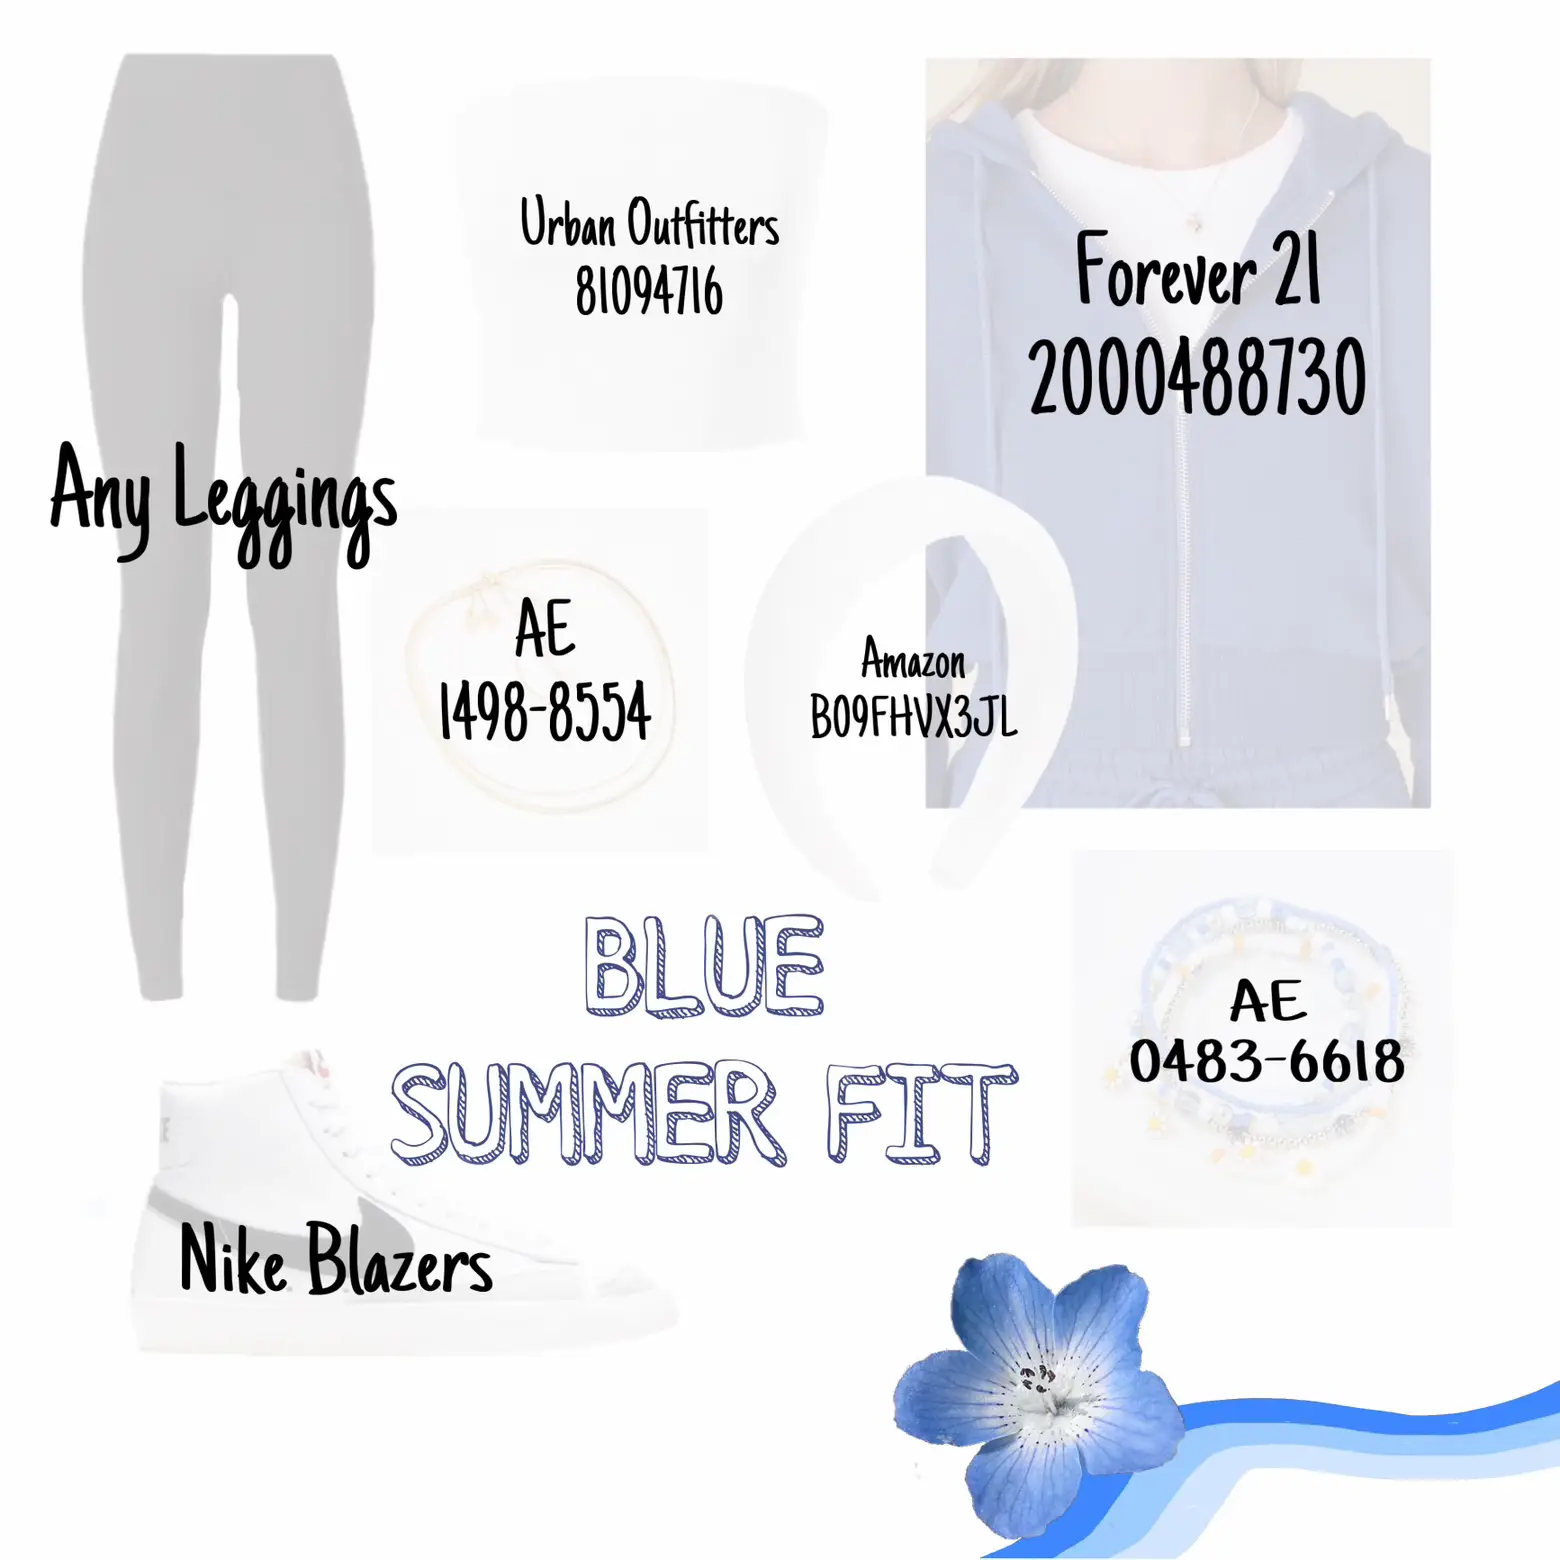 pastel blue lululemon leggings are everything. #fyp =)